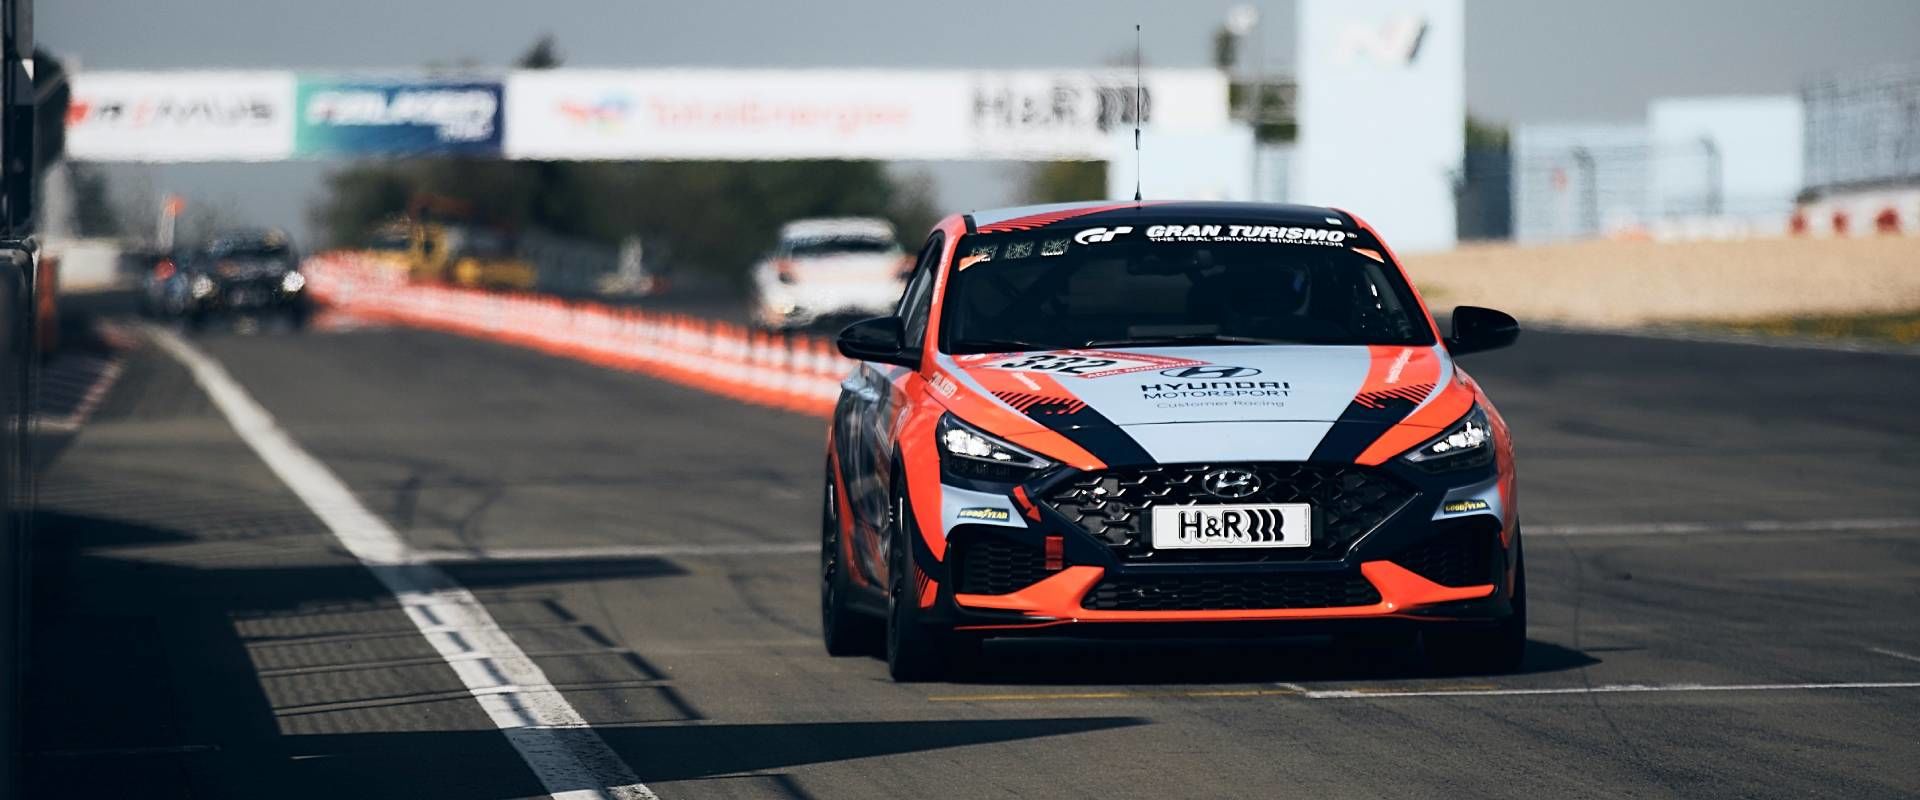 Hyundai Motor Ready for 24-hour Nürburgring Race, Seeking Repeat Victory for N Brand